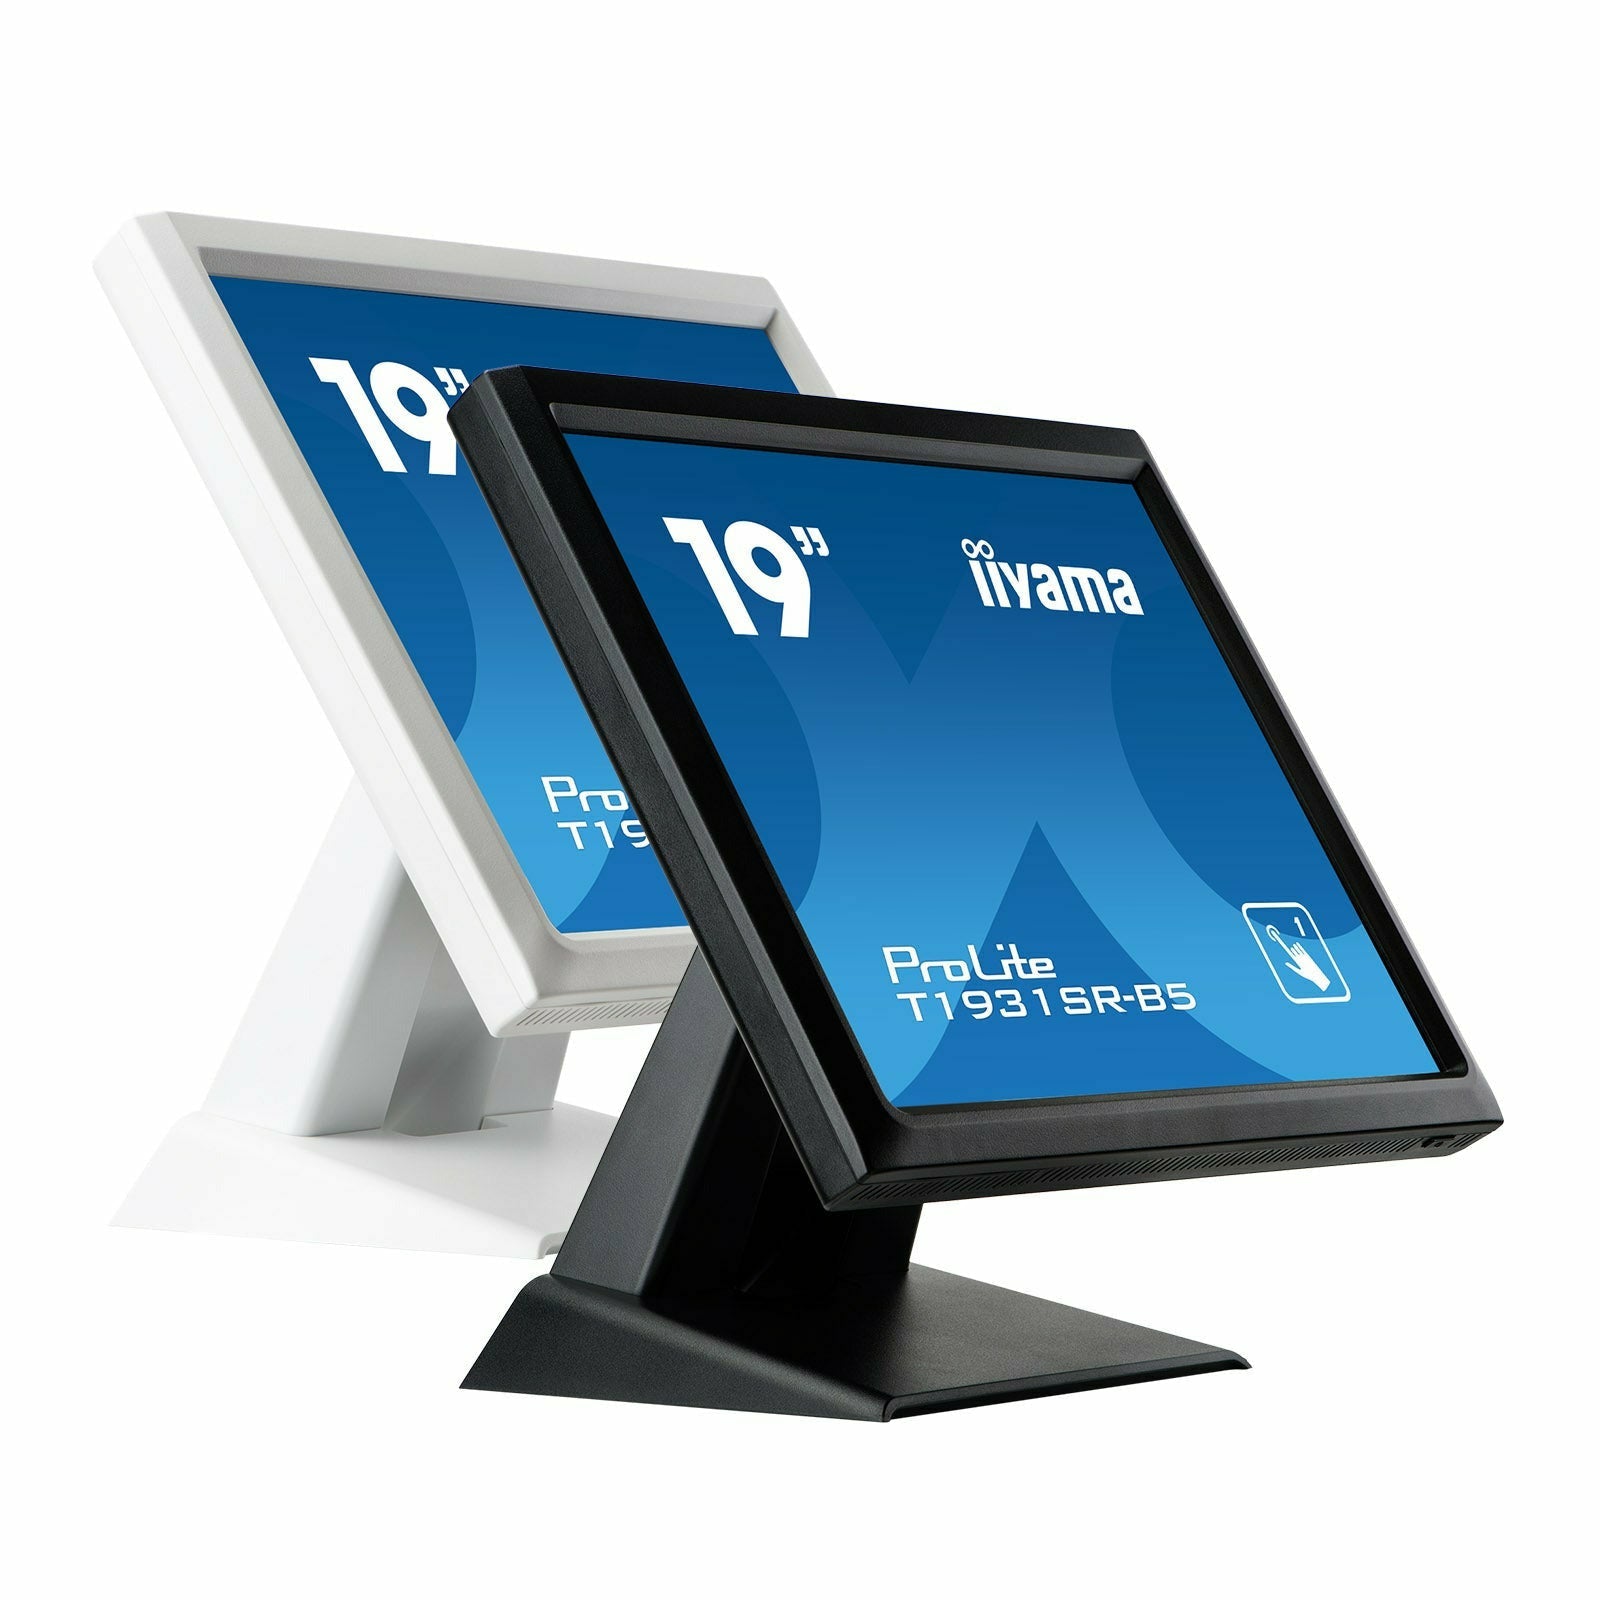 iiyama ProLite T1931SR-B5 19" Touch Screen Black Display